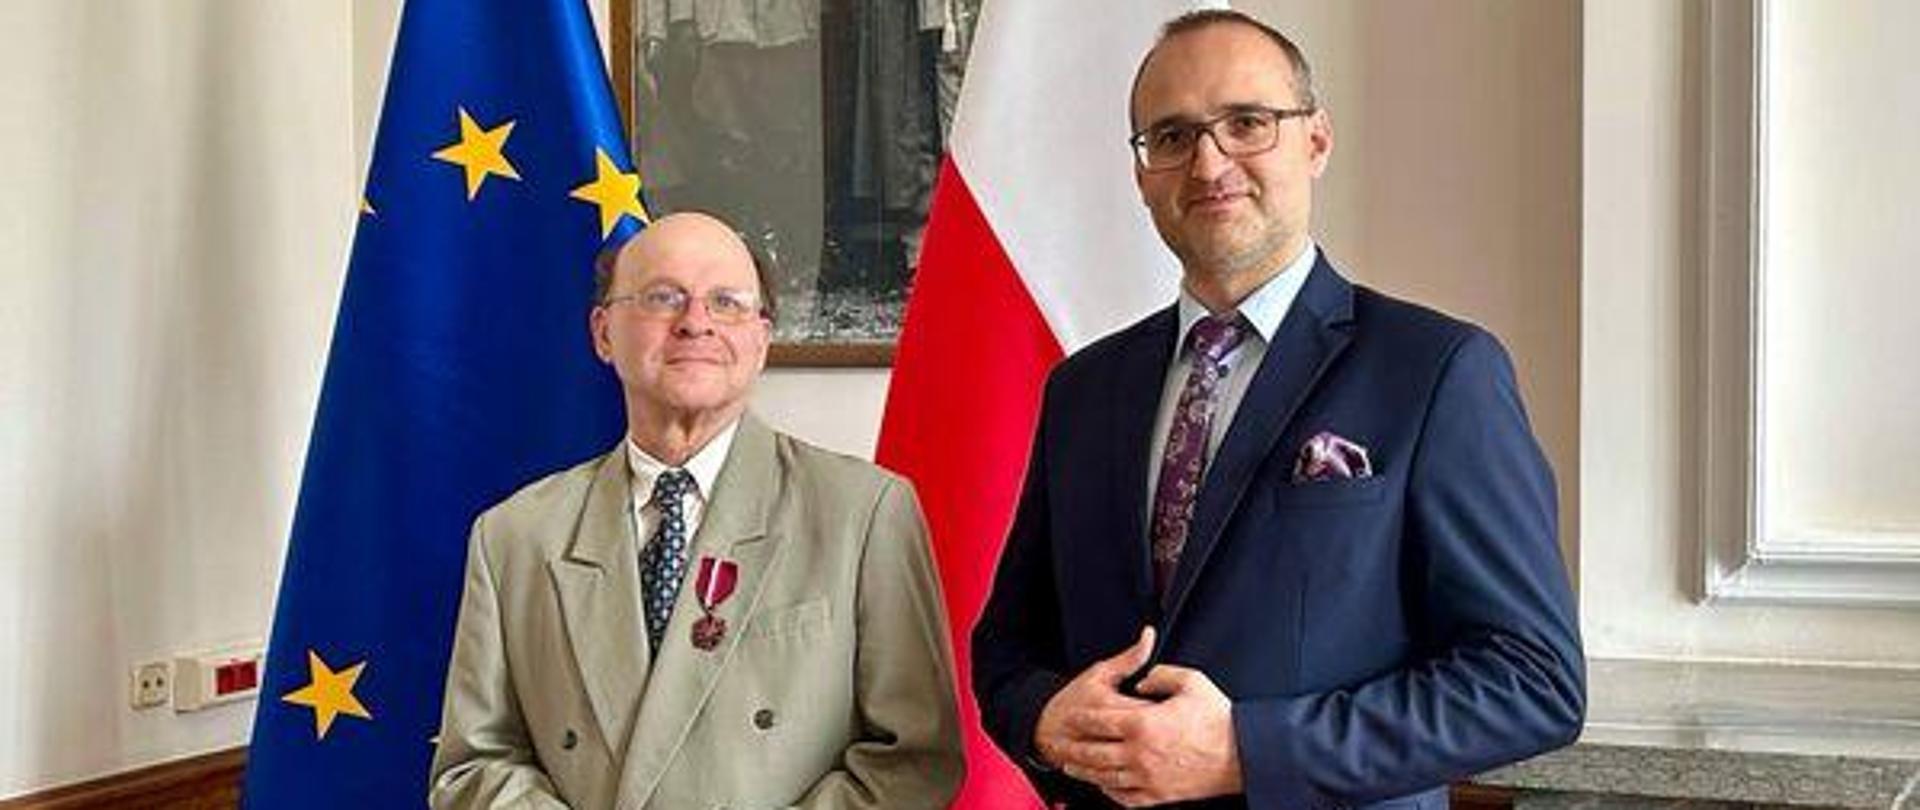 dwóch mężczyzn stoi na tle flag polskiej i unijnej. Jeden ma w klapie medal Gloria artis